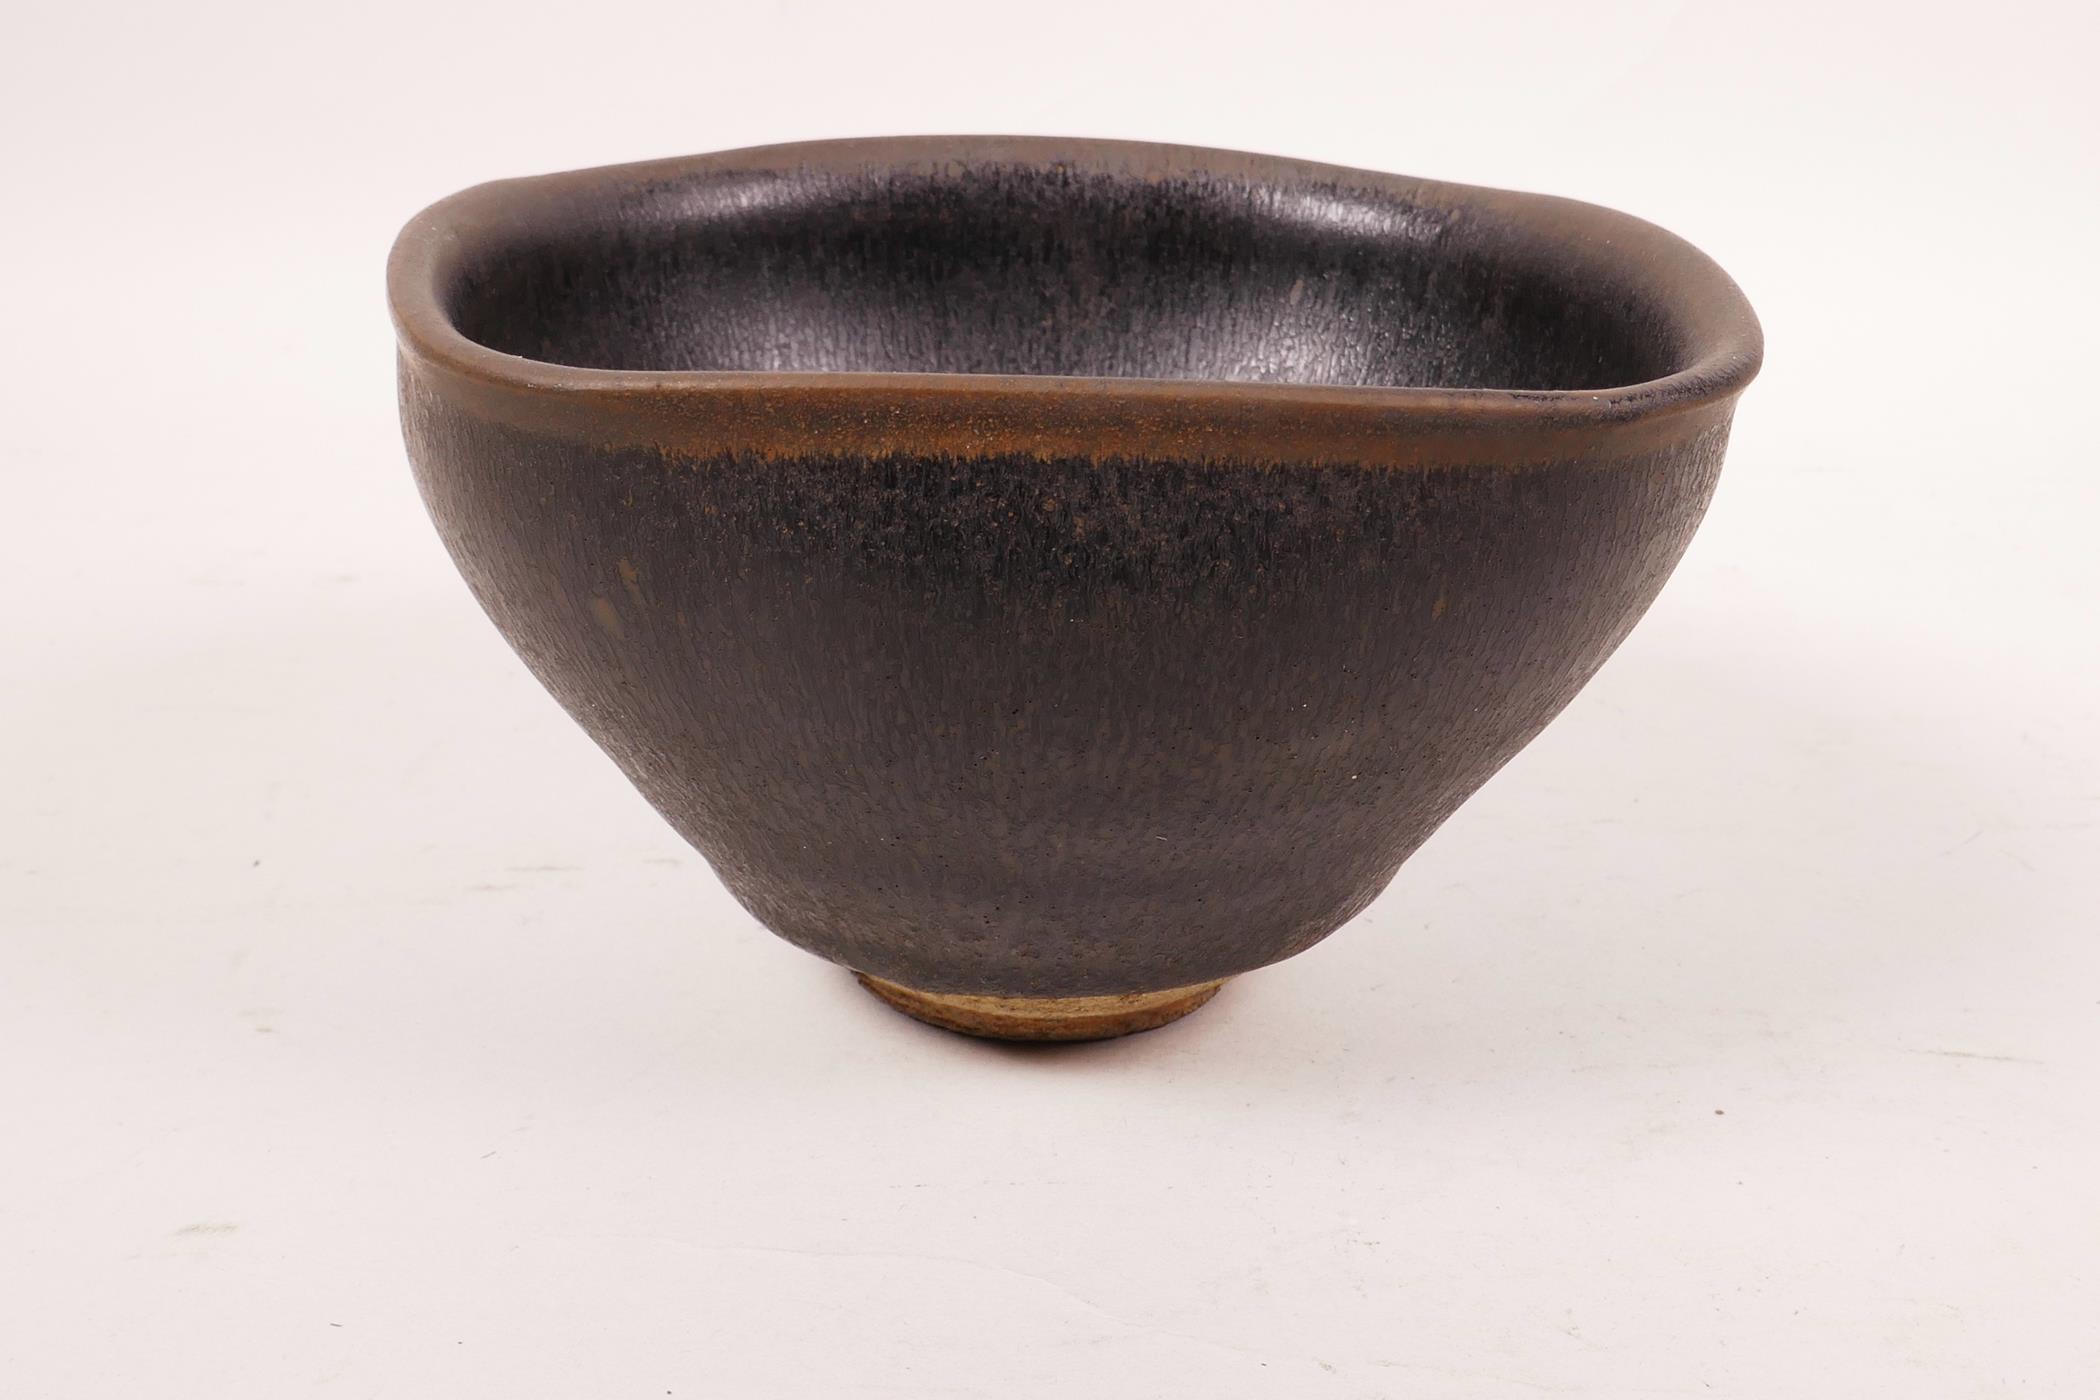 A Chinese Jian kiln rice bowl with a hare's fur glaze 5" diameter